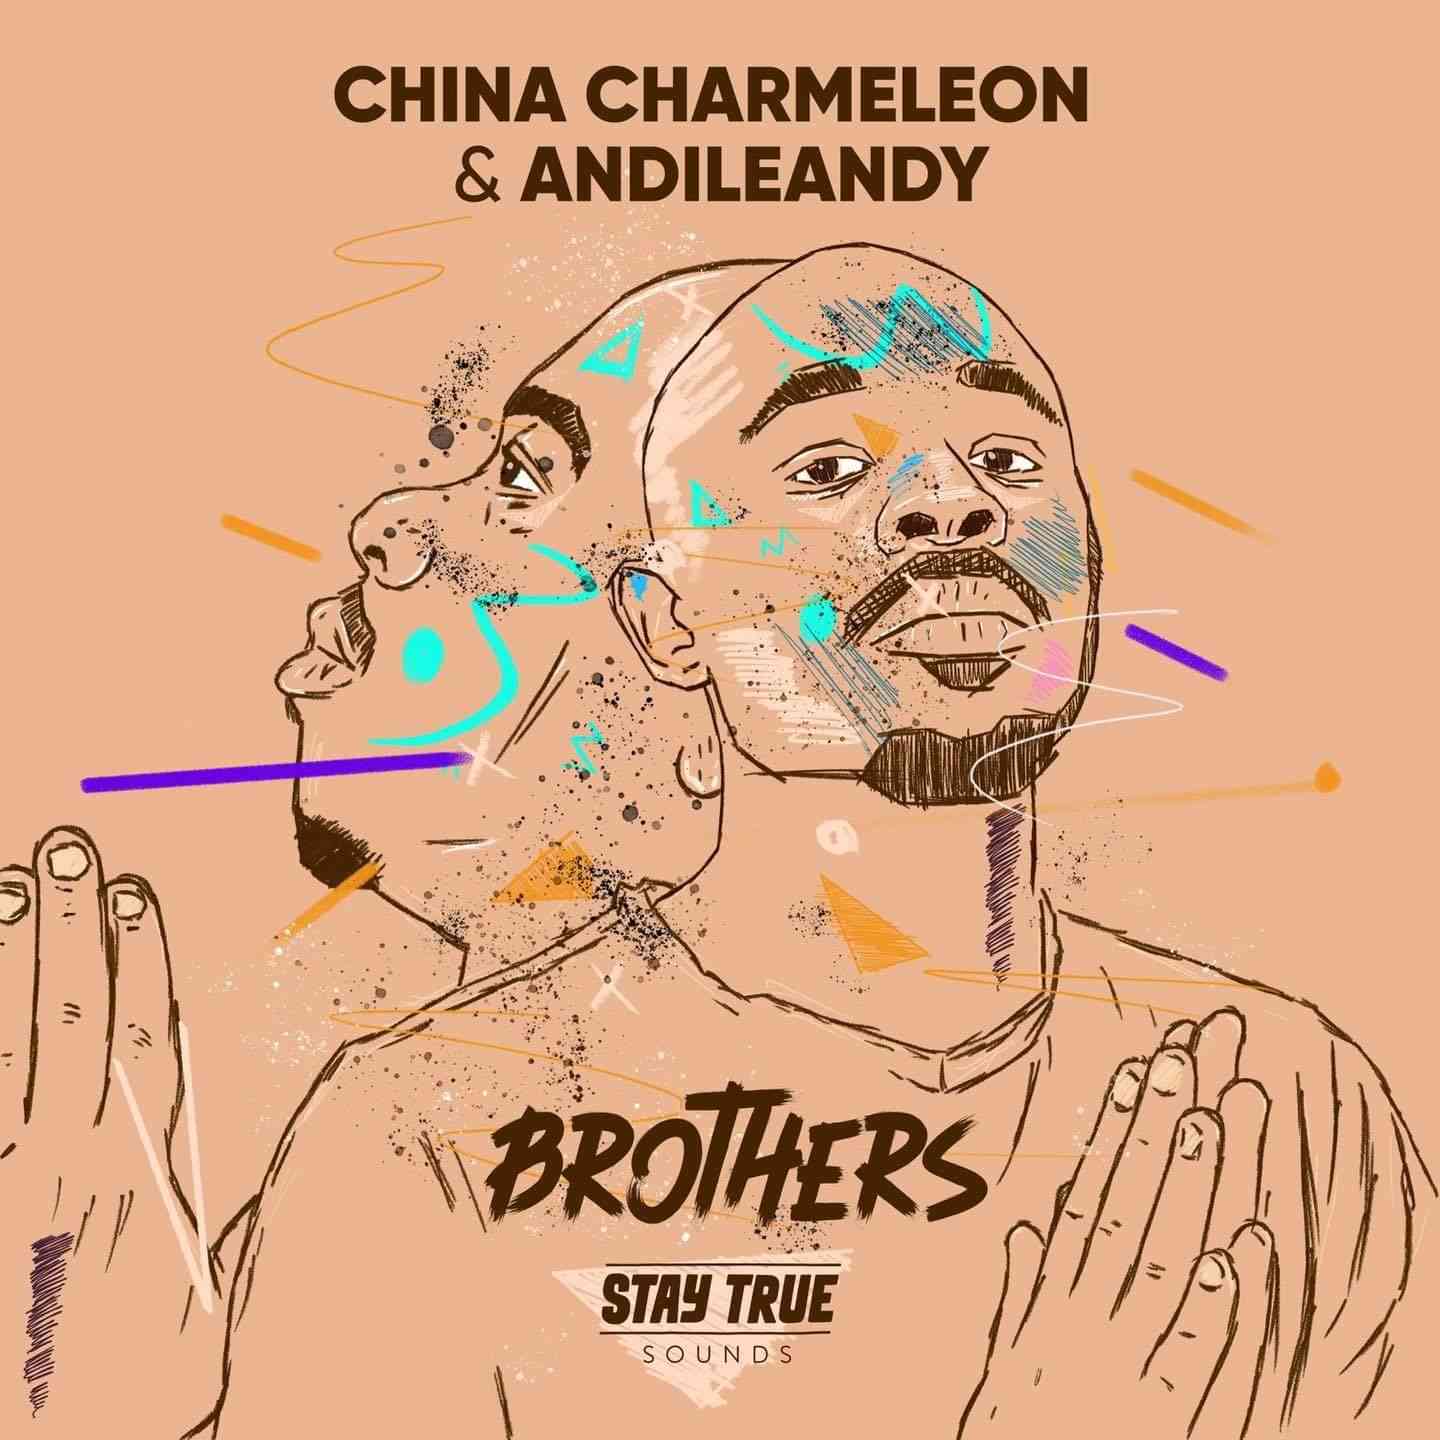 China Charmeleon & AndileAndy Drop "Brothers" 